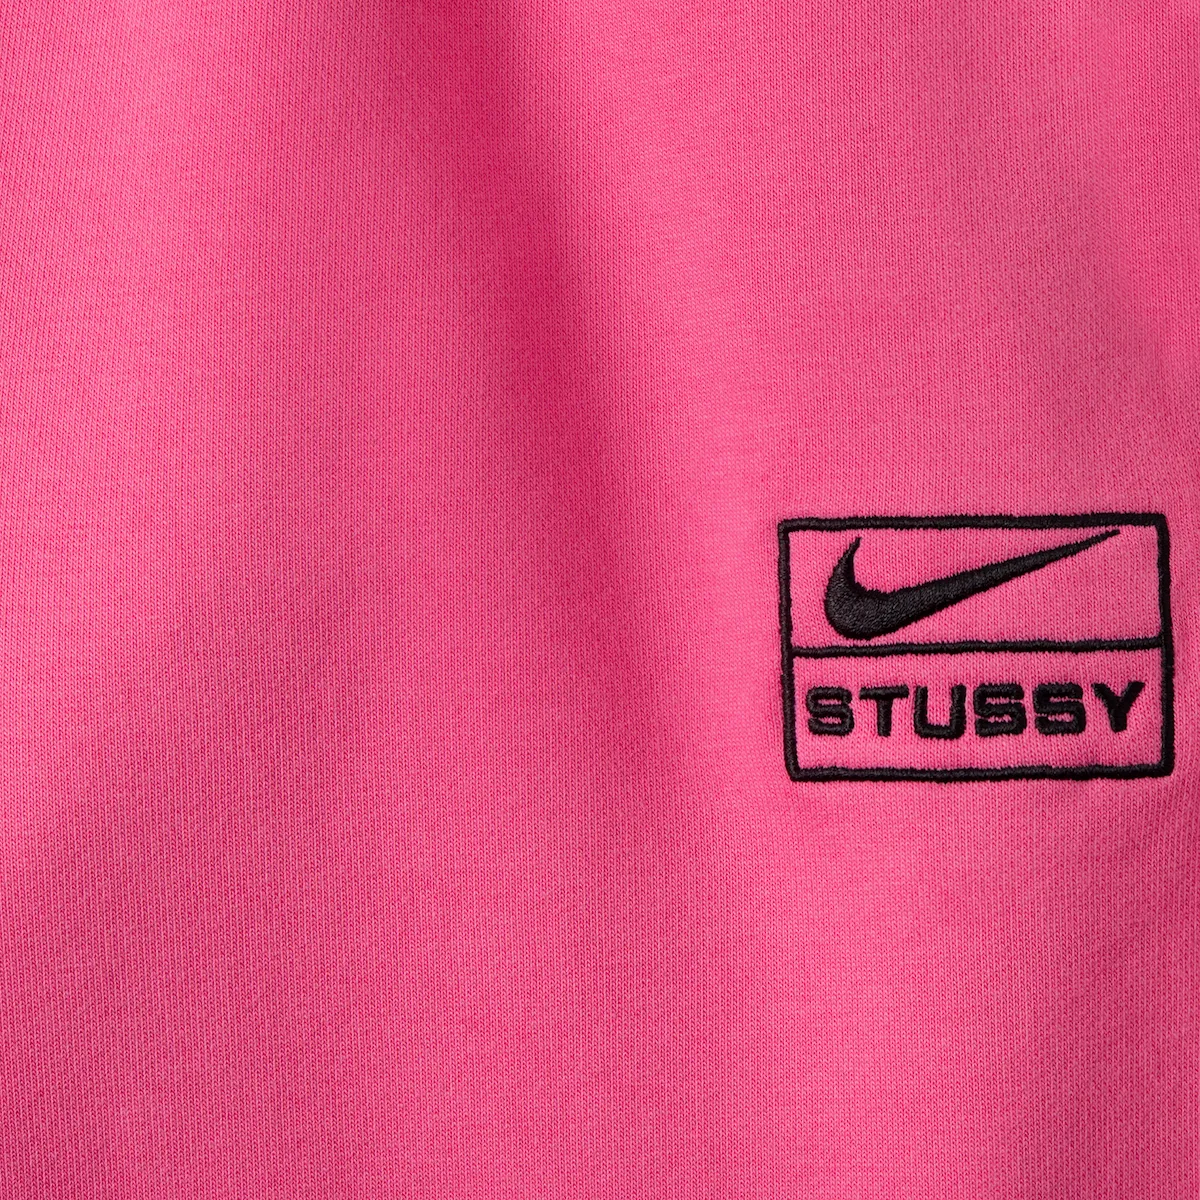 stussy-nike-air-max-2013-apparel-release-20220806